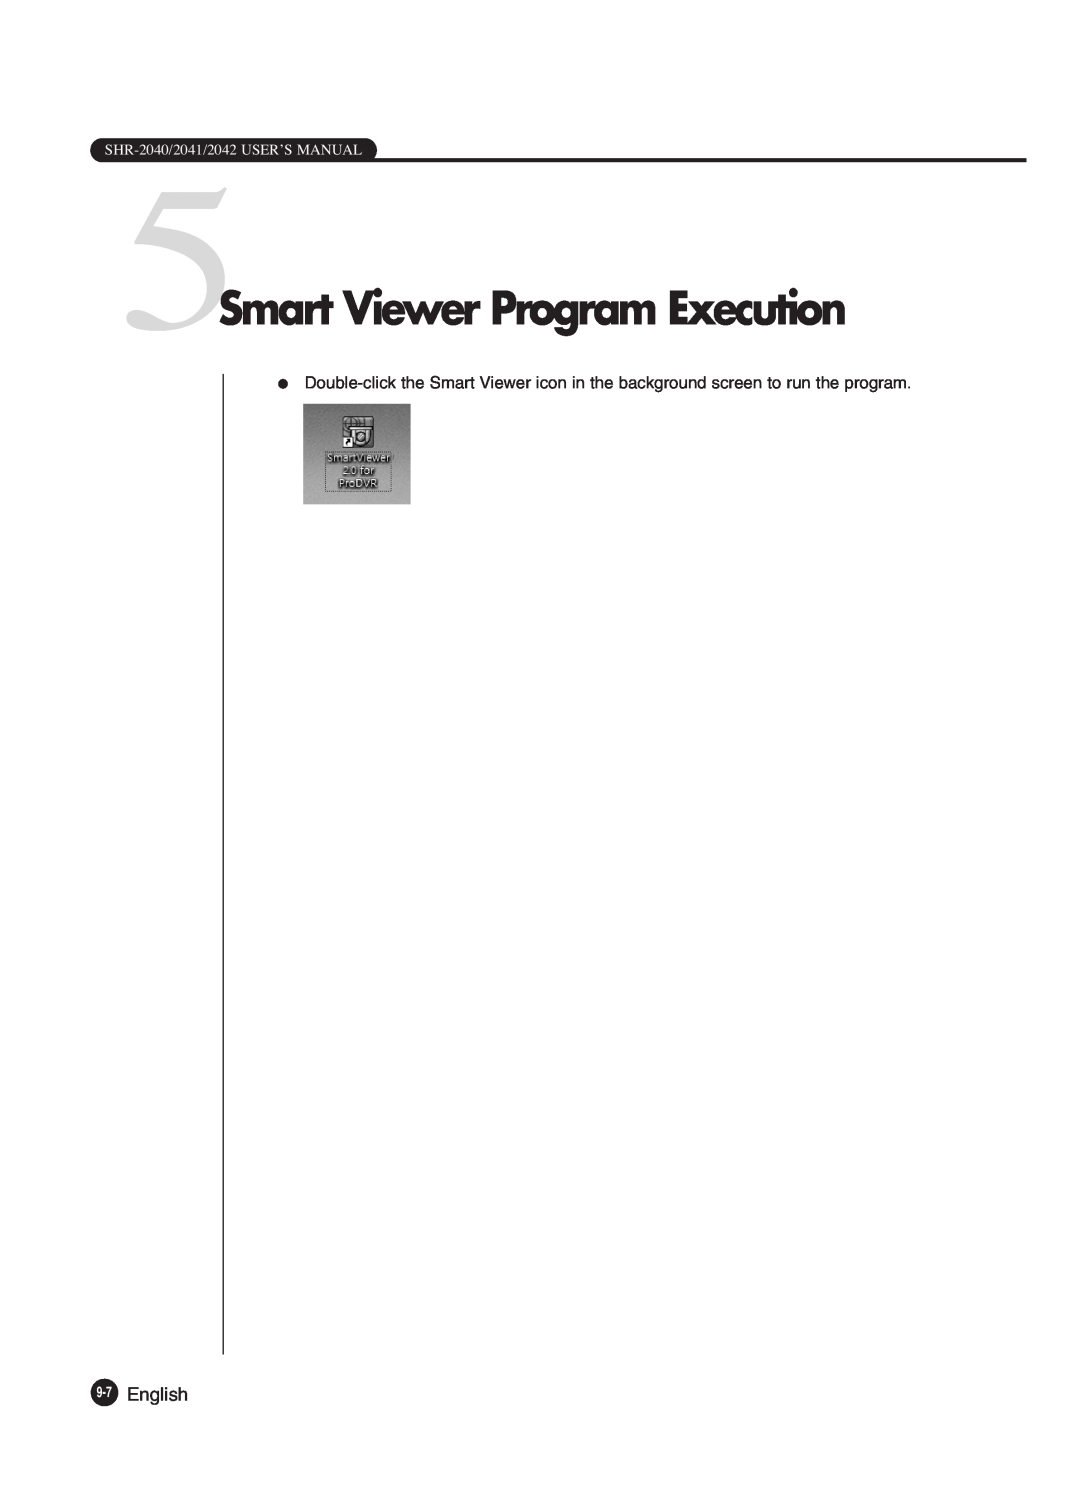 Samsung SHR-2042P250, SHR-2040P250 manual 5Smart Viewer Program Execution, English, SHR-2040/2041/2042 USER’S MANUAL 